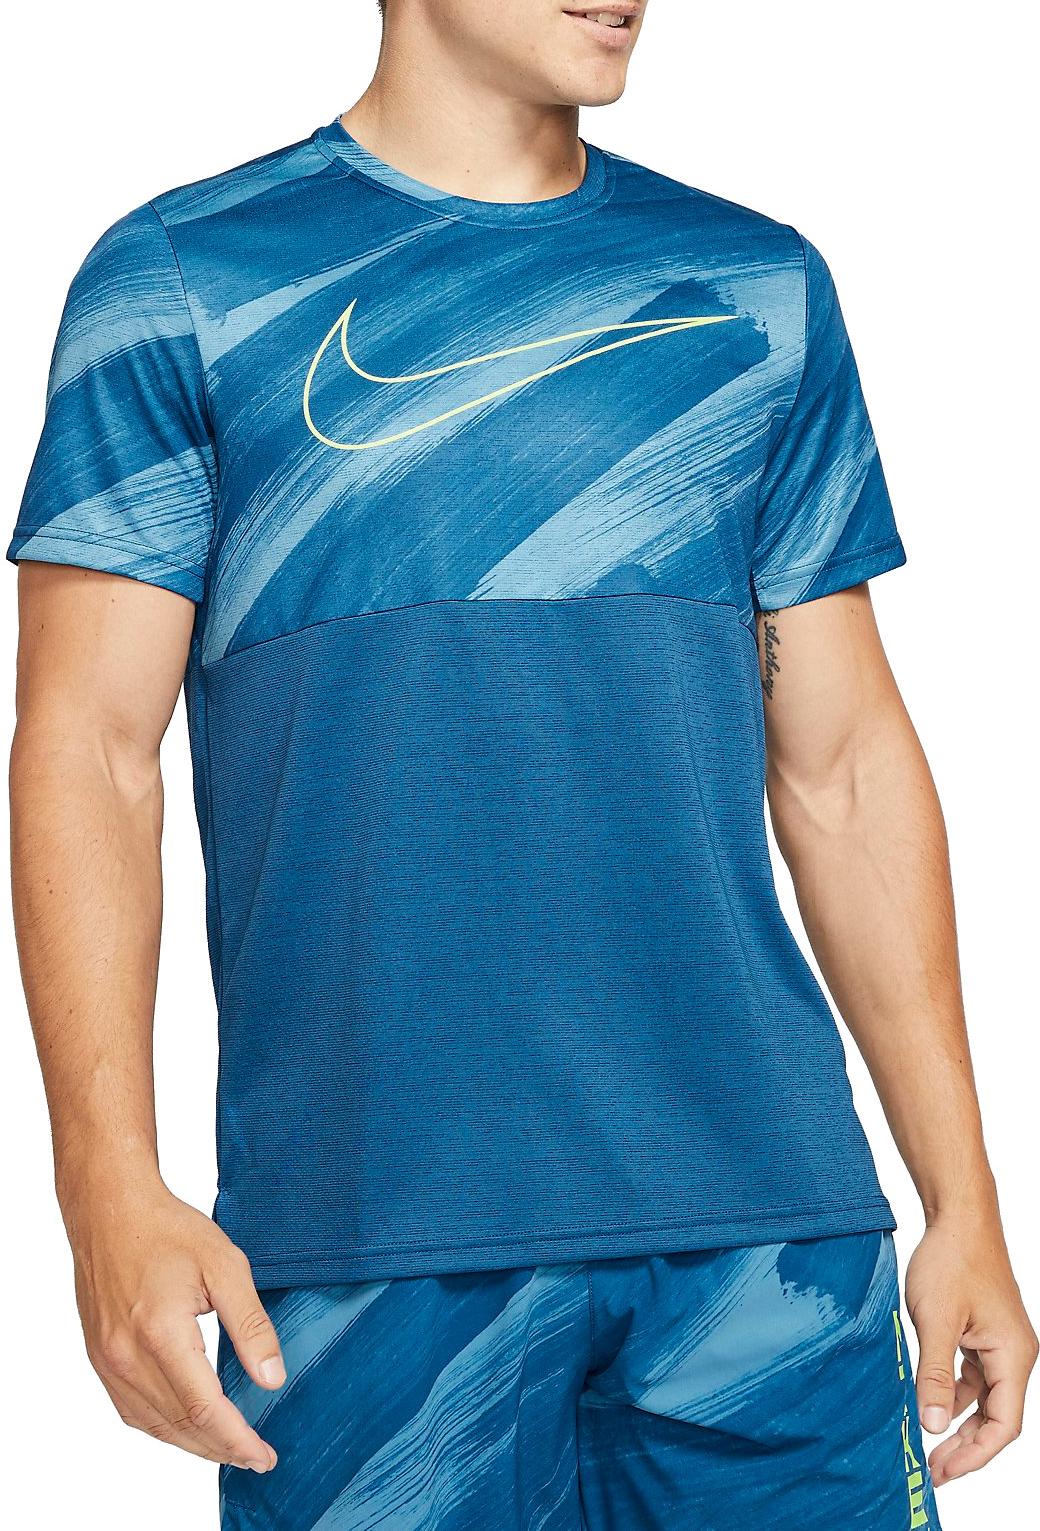 Nike Men's Pro Compression Short Sleeve Tagless Shirt CJ0965 (Royal, Small)  